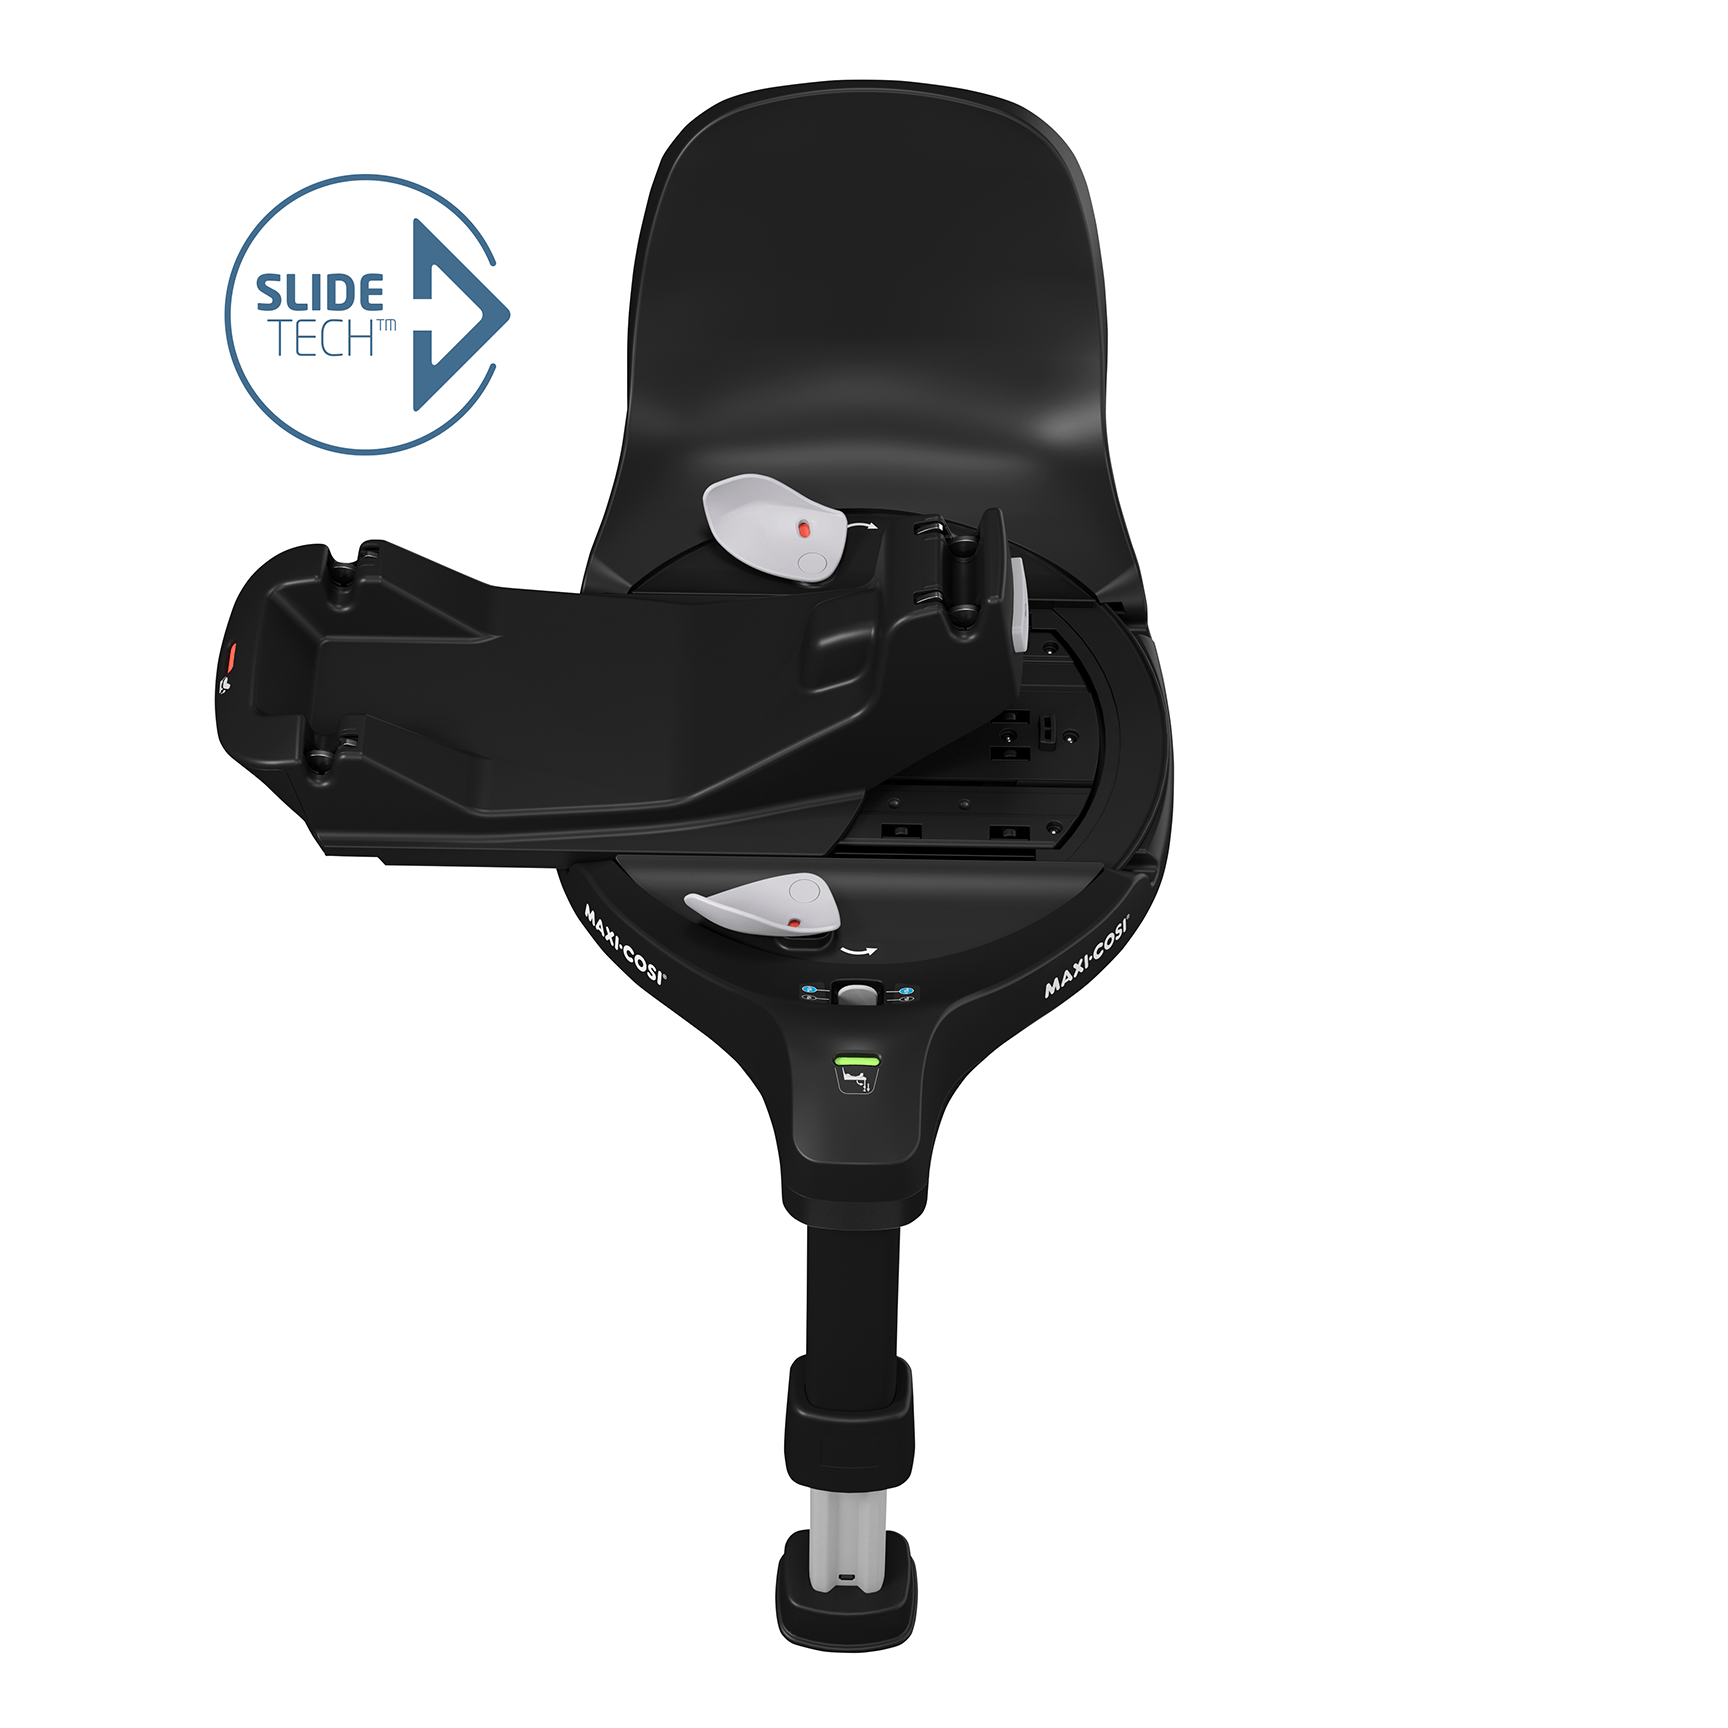 Maxi-Cosi baby car seats Maxi-Cosi 360 Family Pro Bundle - Essential Graphite KF54500000